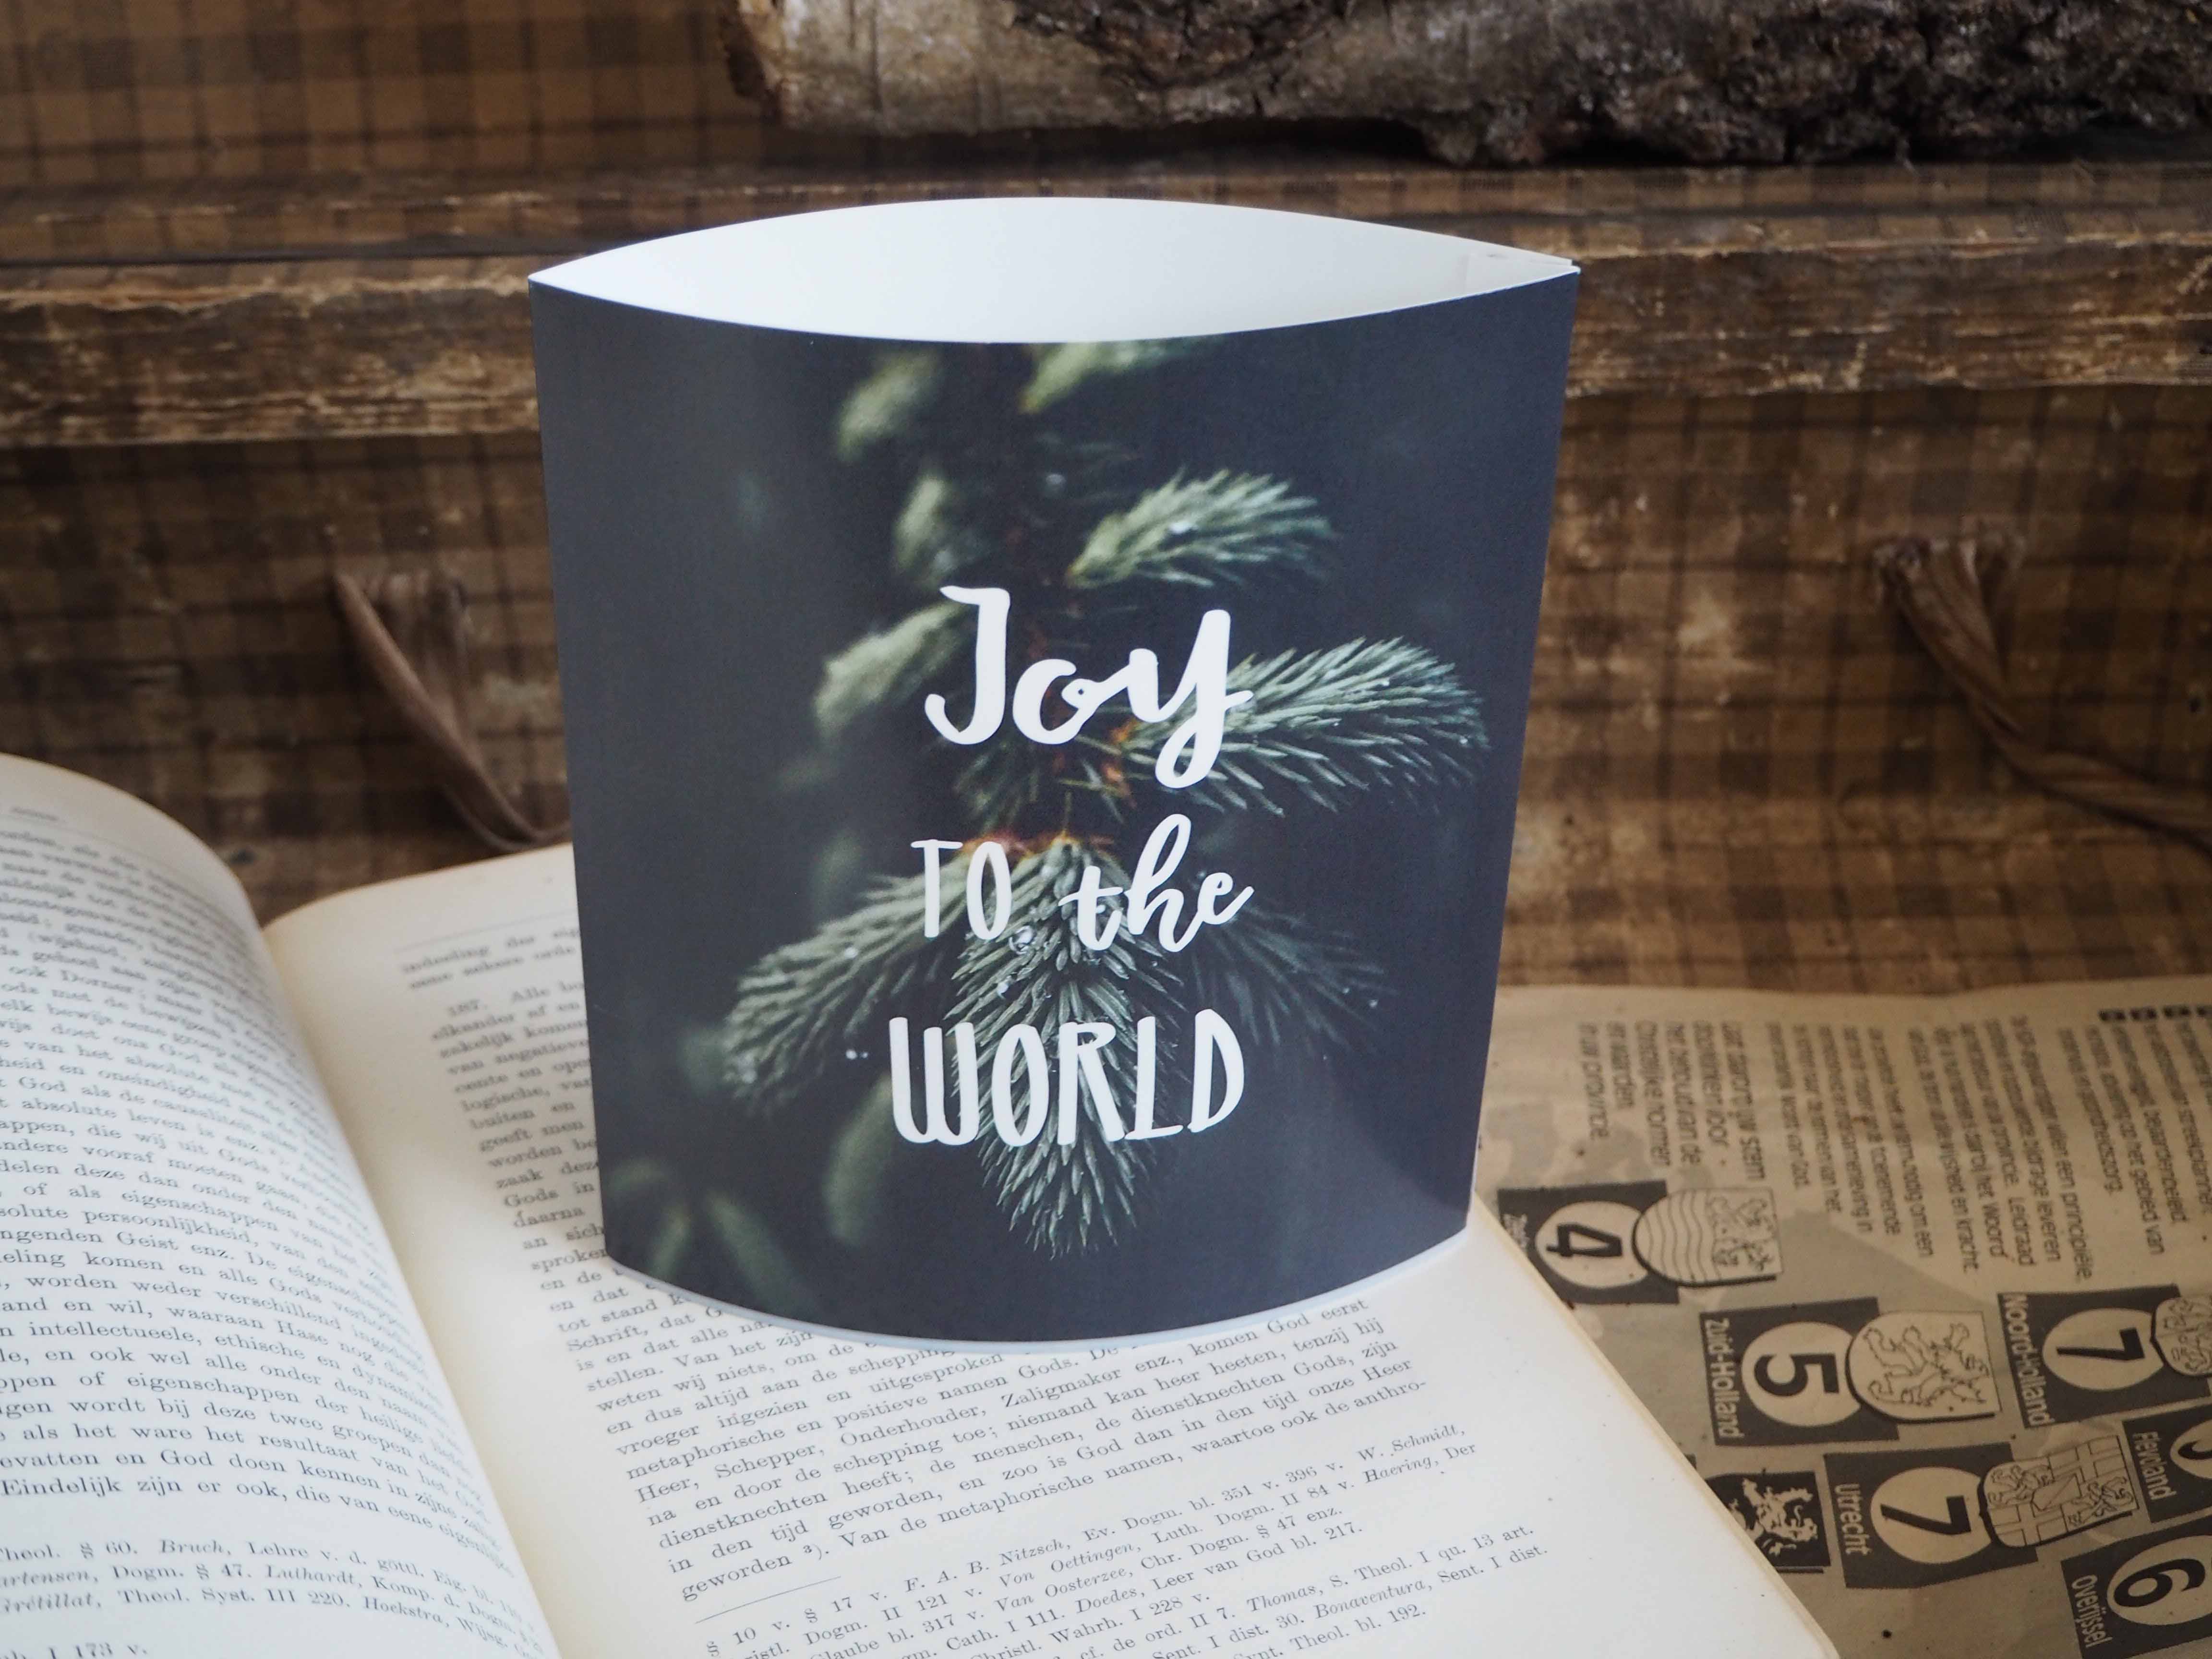 Lichtje voor jou: Joy to the world